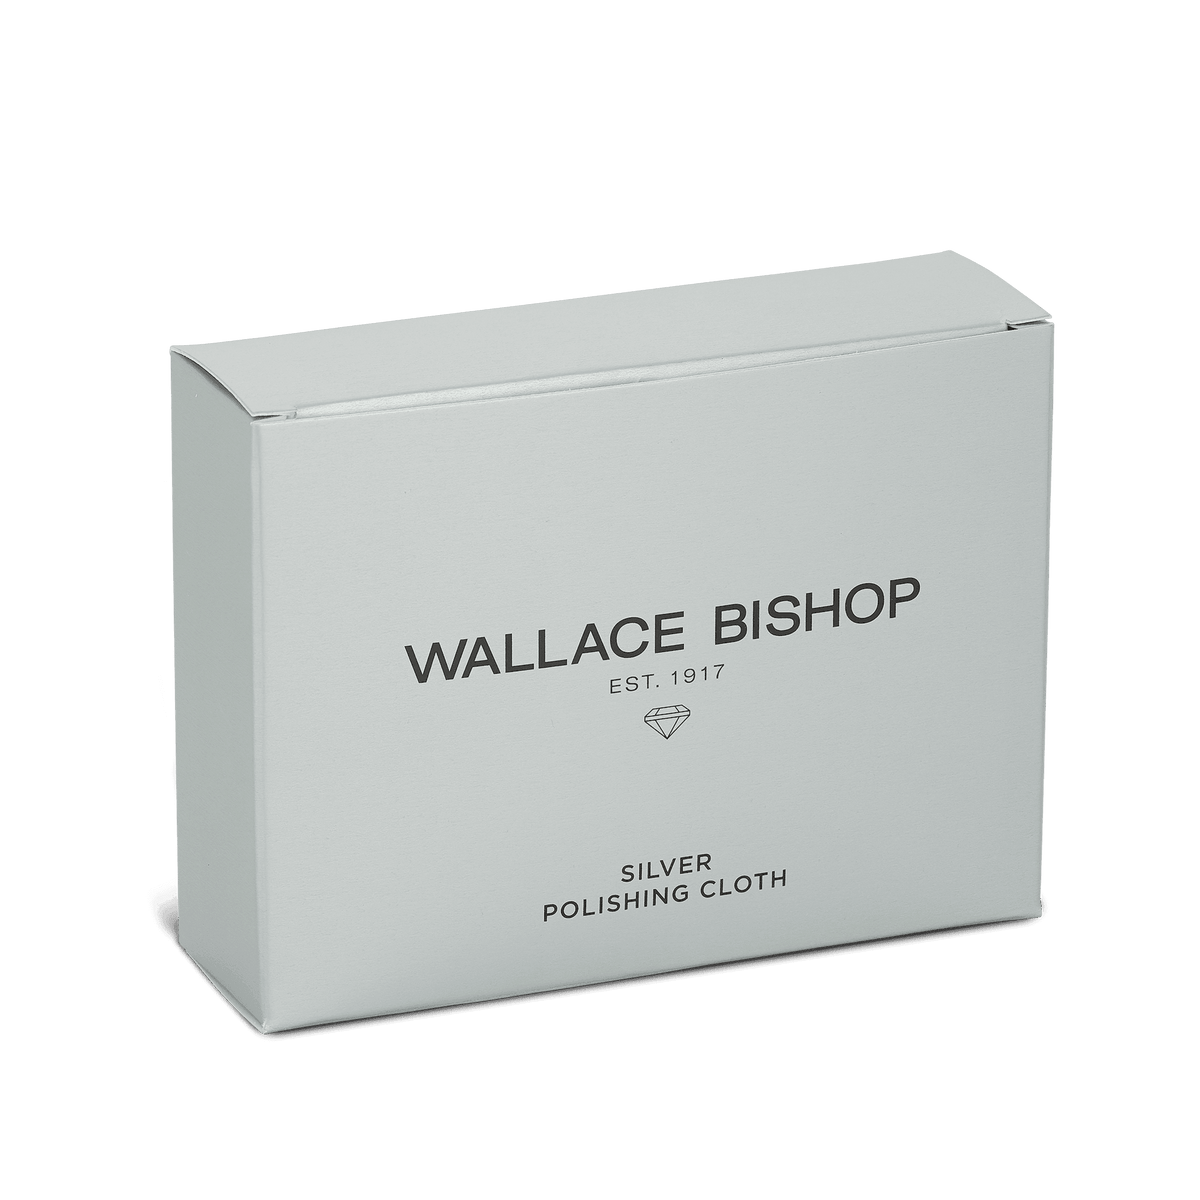 Silver Polishing Cloth - Wallace Bishop